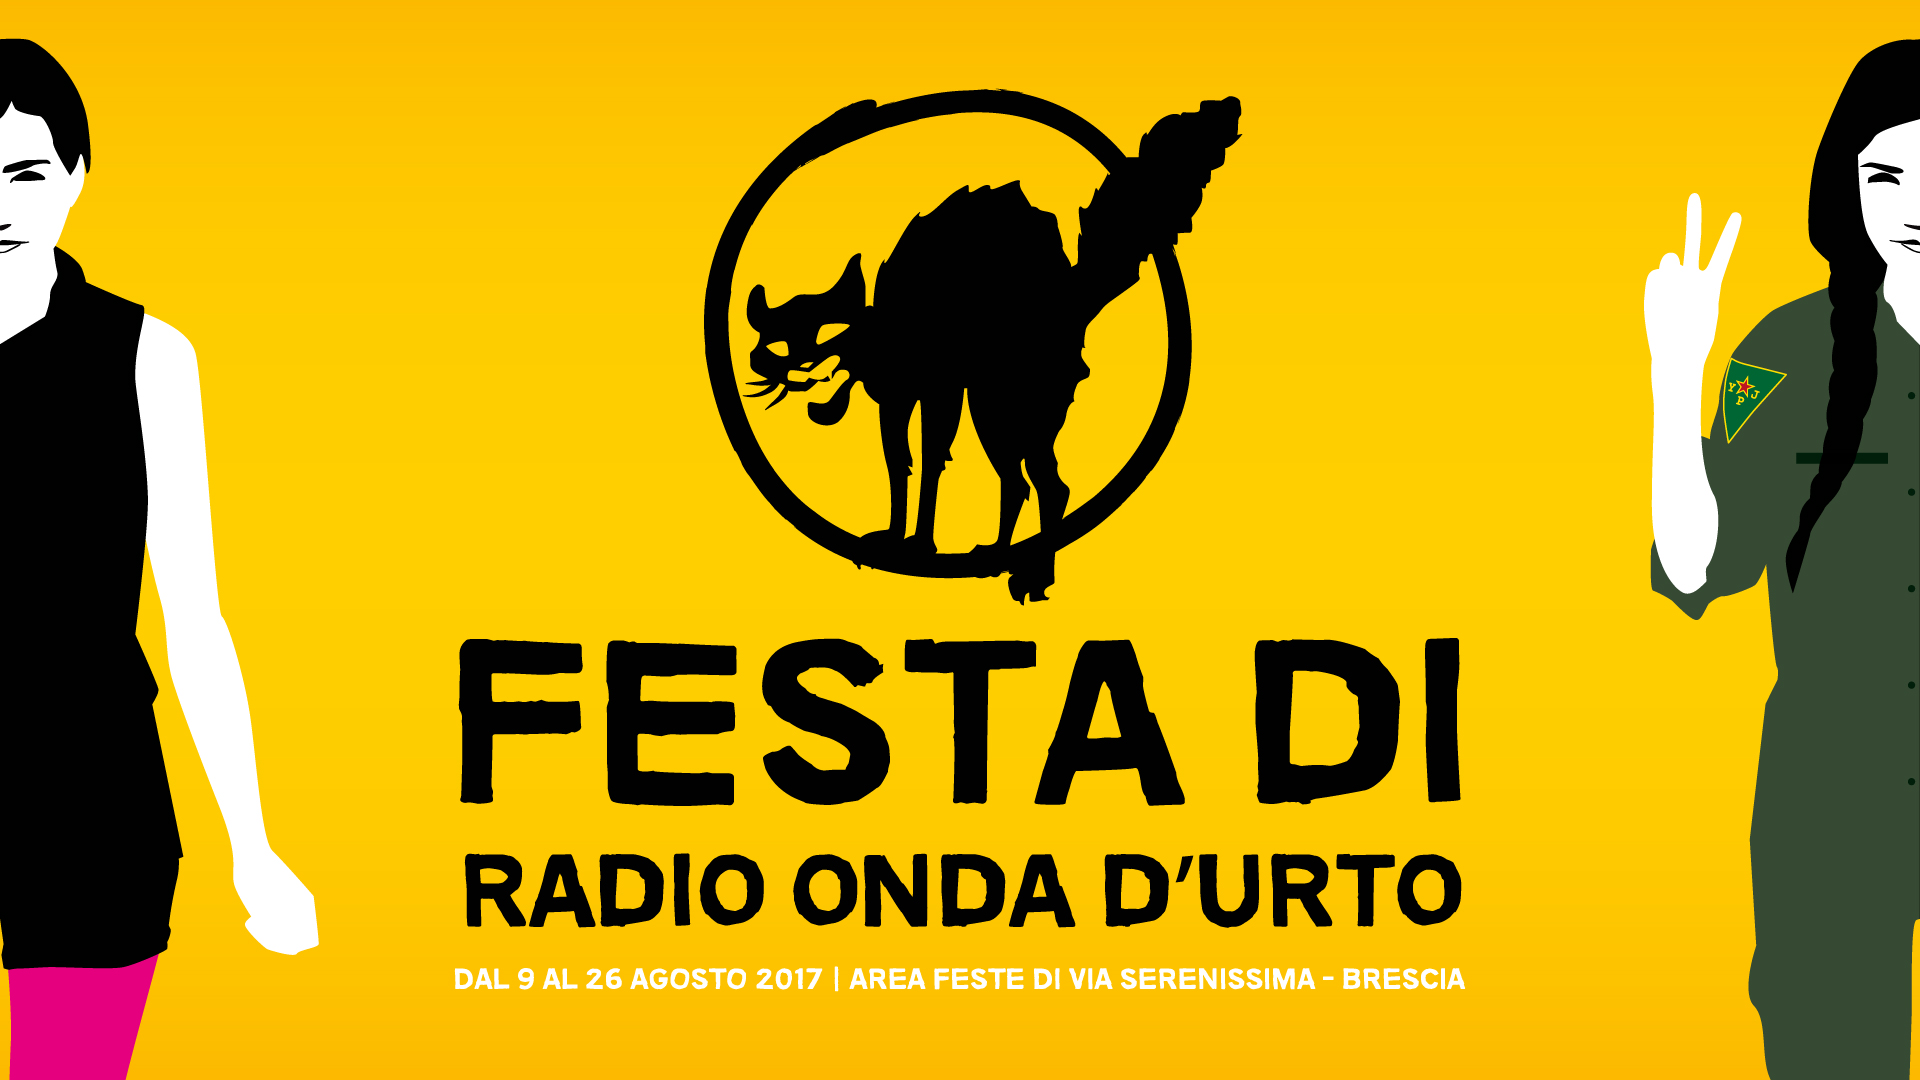 Live @ Festa Radio Onda d’Urto 2017 – 18 agosto